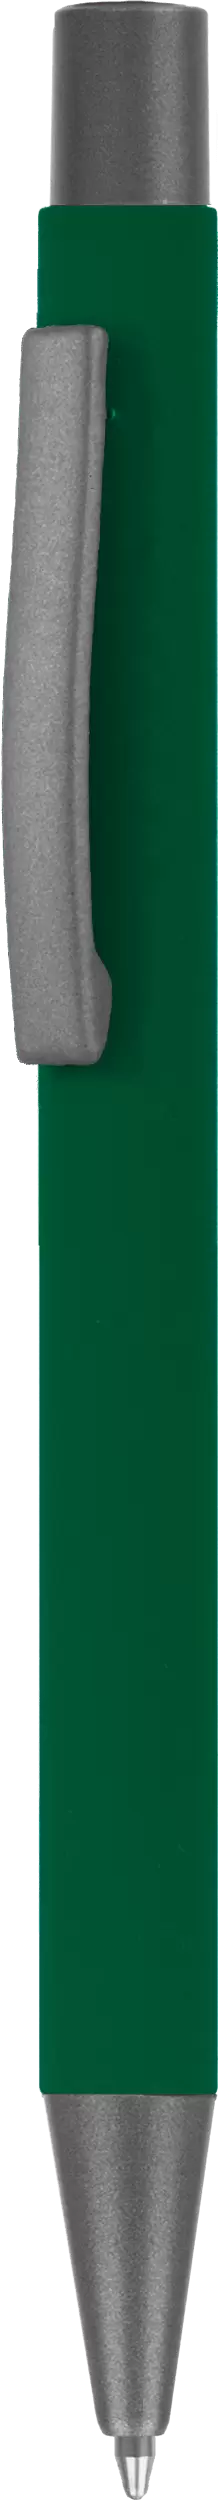 Ручка MAX SOFT TITAN Зеленая 1110-02